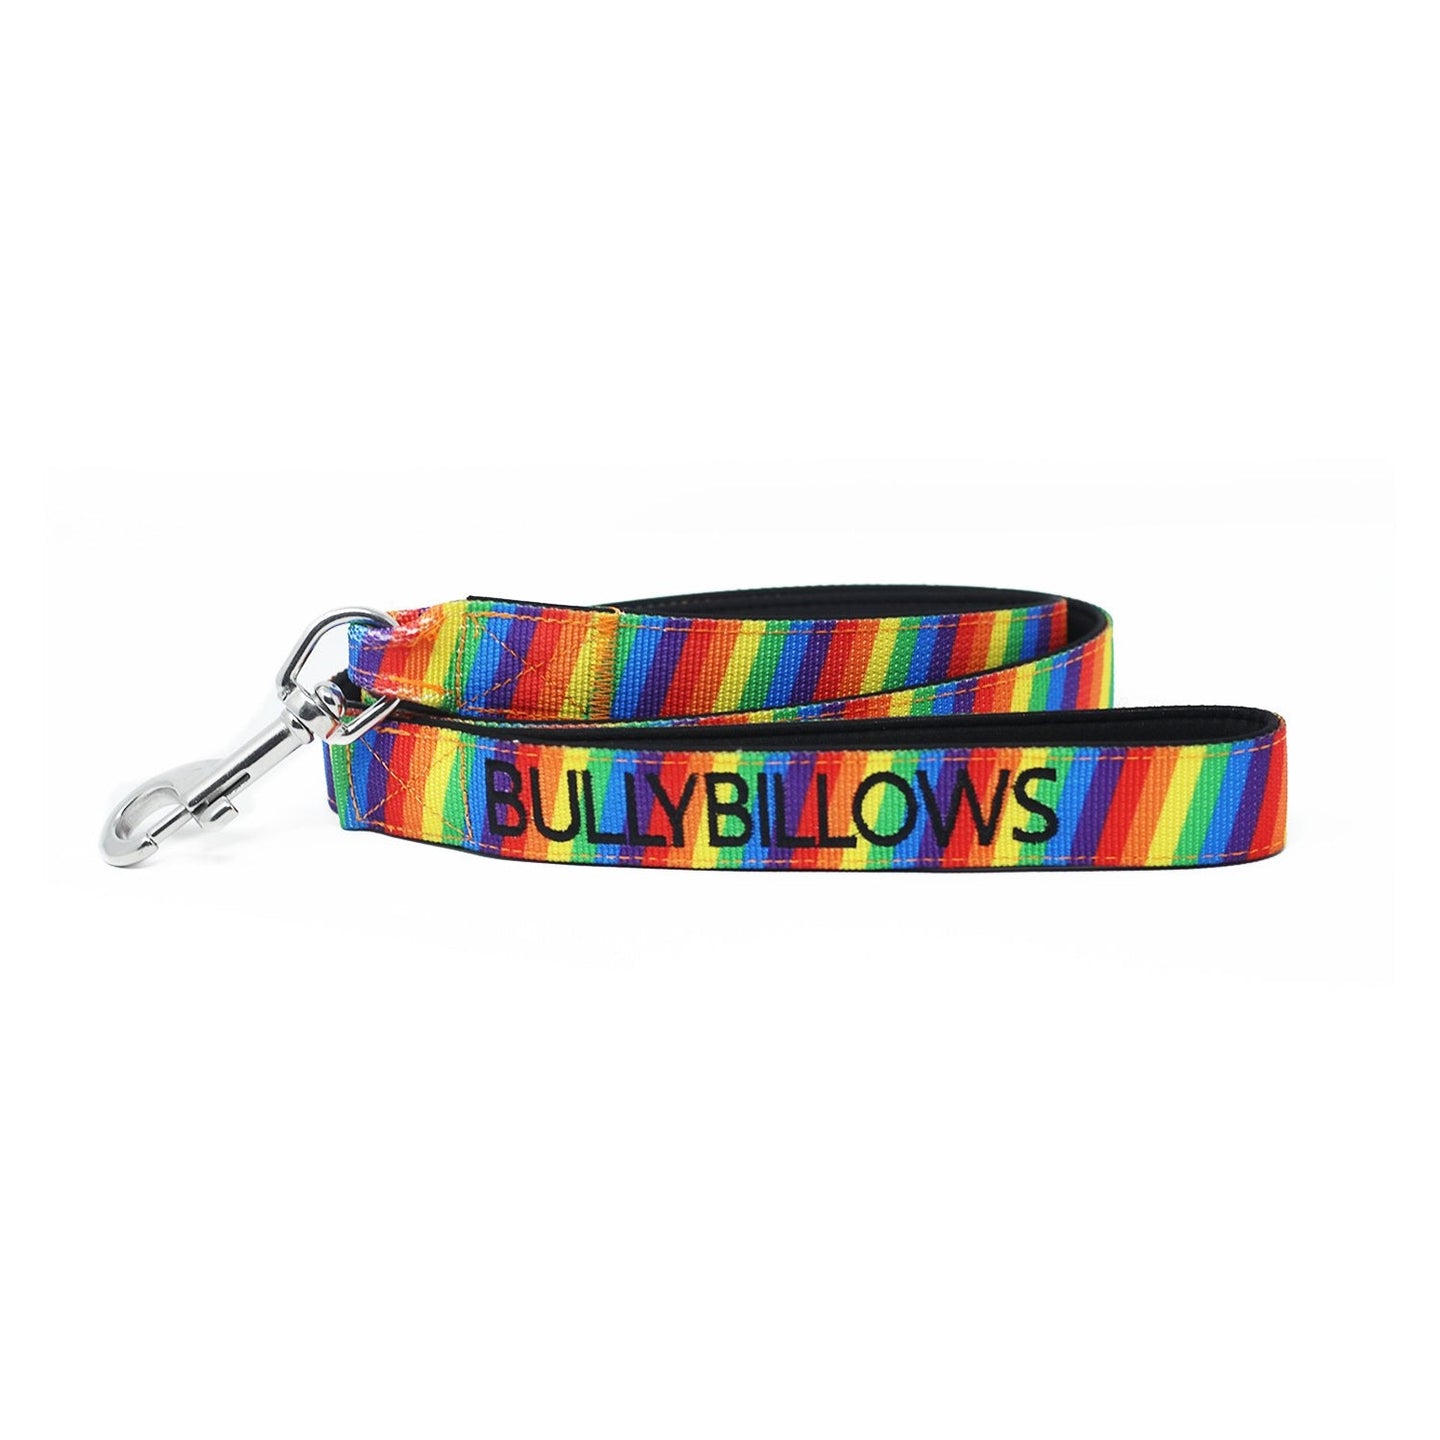 Bully Billows - Nylon Snap Hook Dog Lead - Rainbow - Bulletproof Pet Products Inc